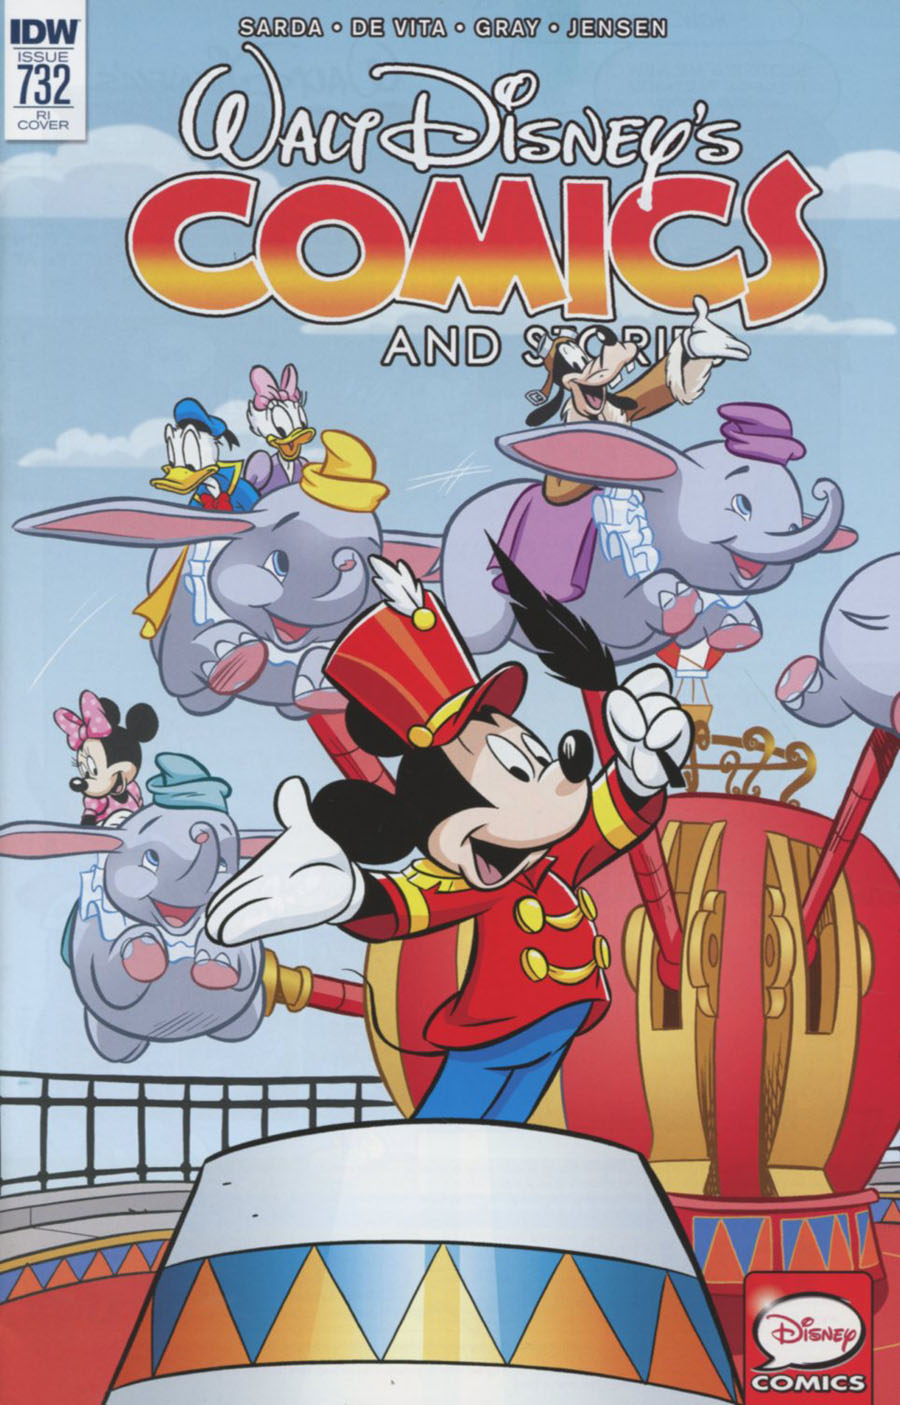 Walt Disneys Comics & Stories #732 Cover C Incentive Fabrizio Petrossi Variant Cover